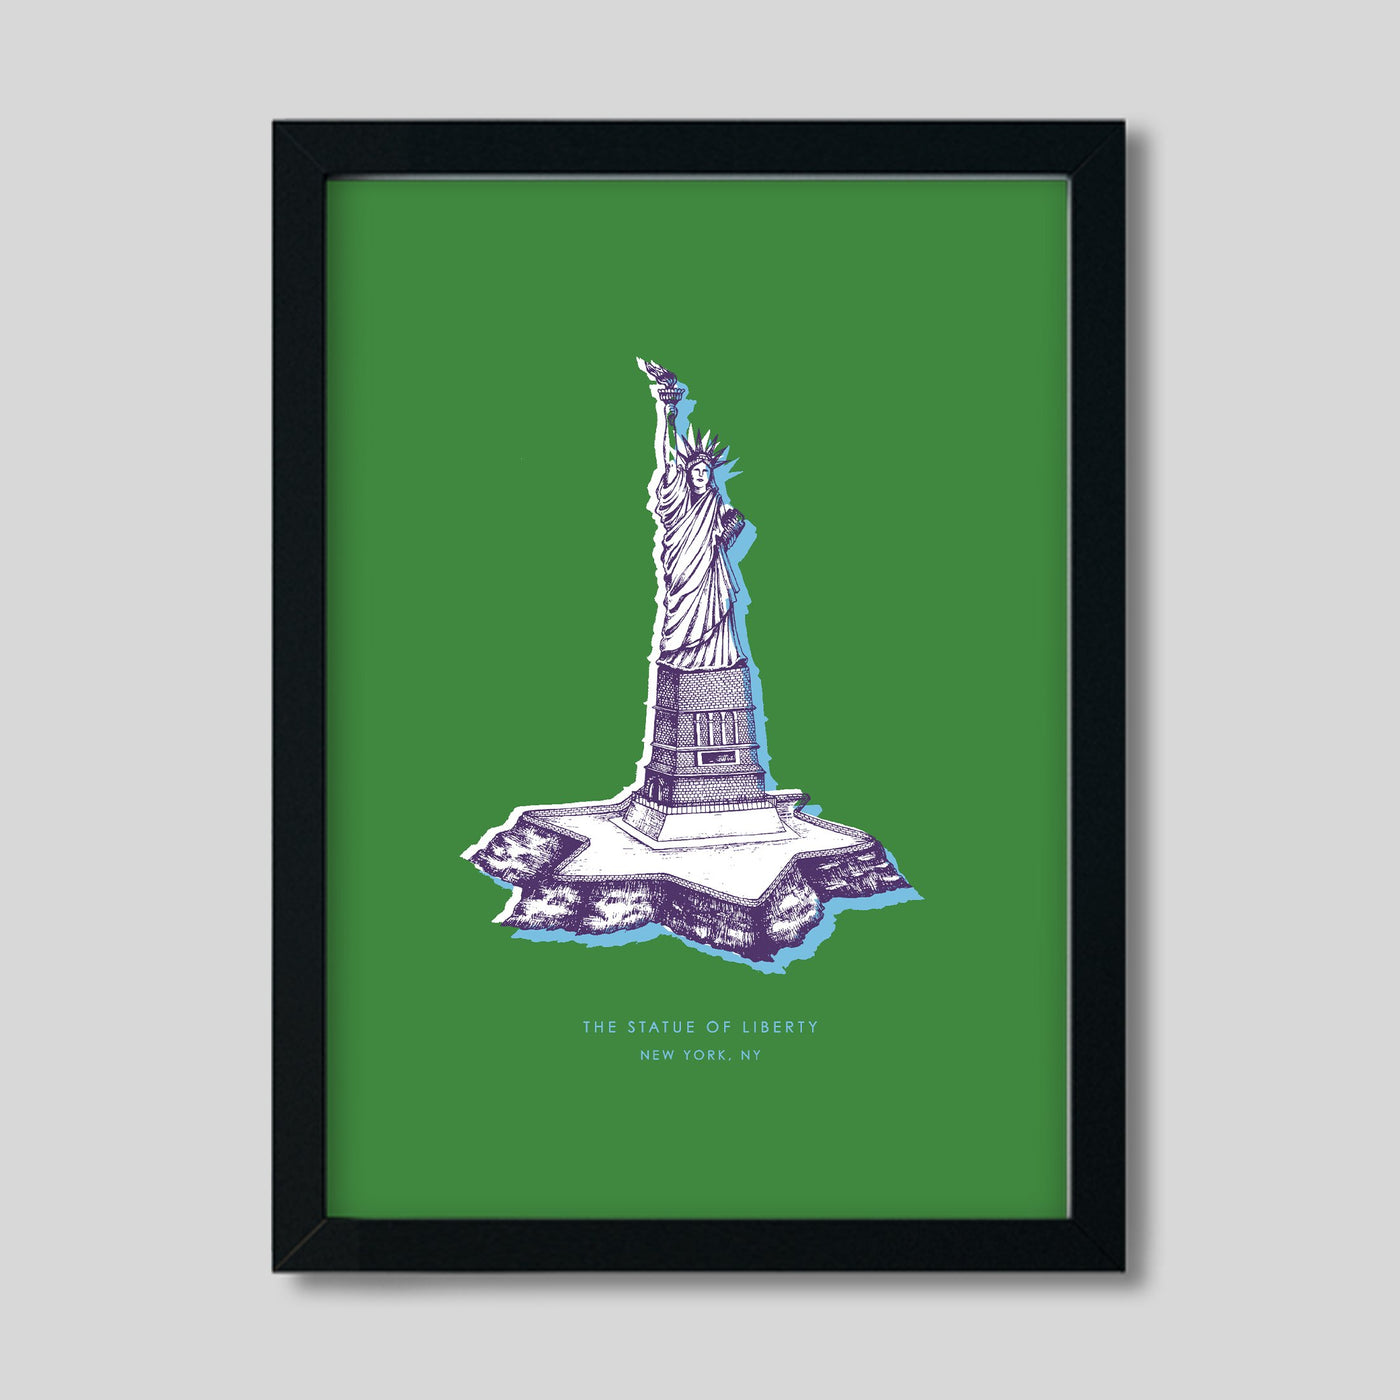 Gallery Prints Green Print / 8x10 / Black New York Statue of Liberty Print dombezalergii